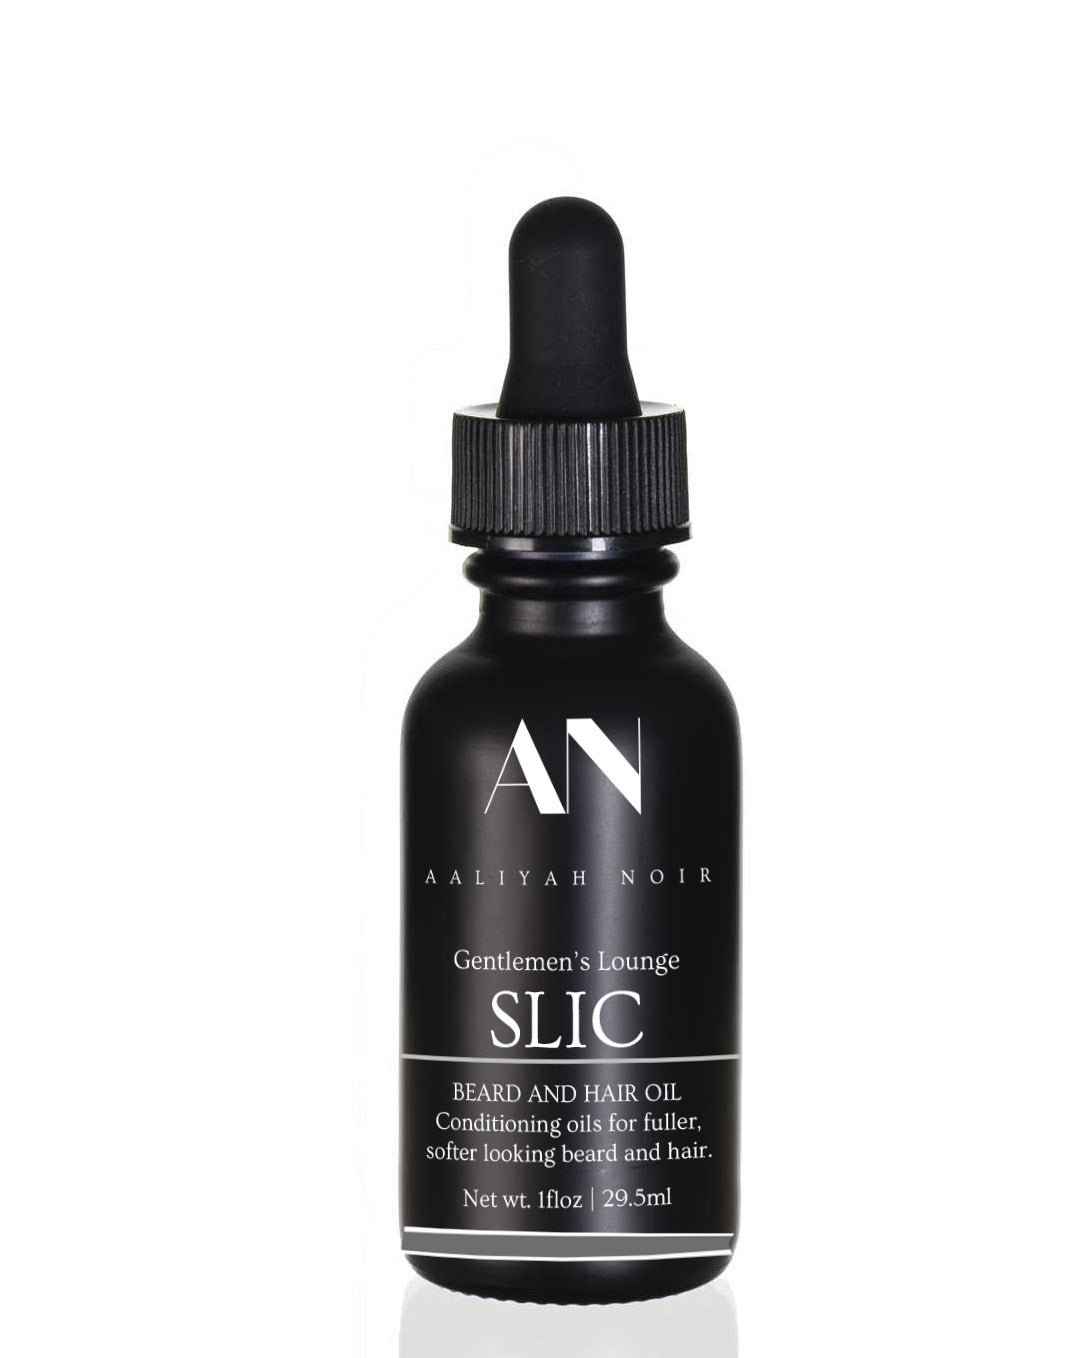 SLIC Premium Beard & Hair Oil